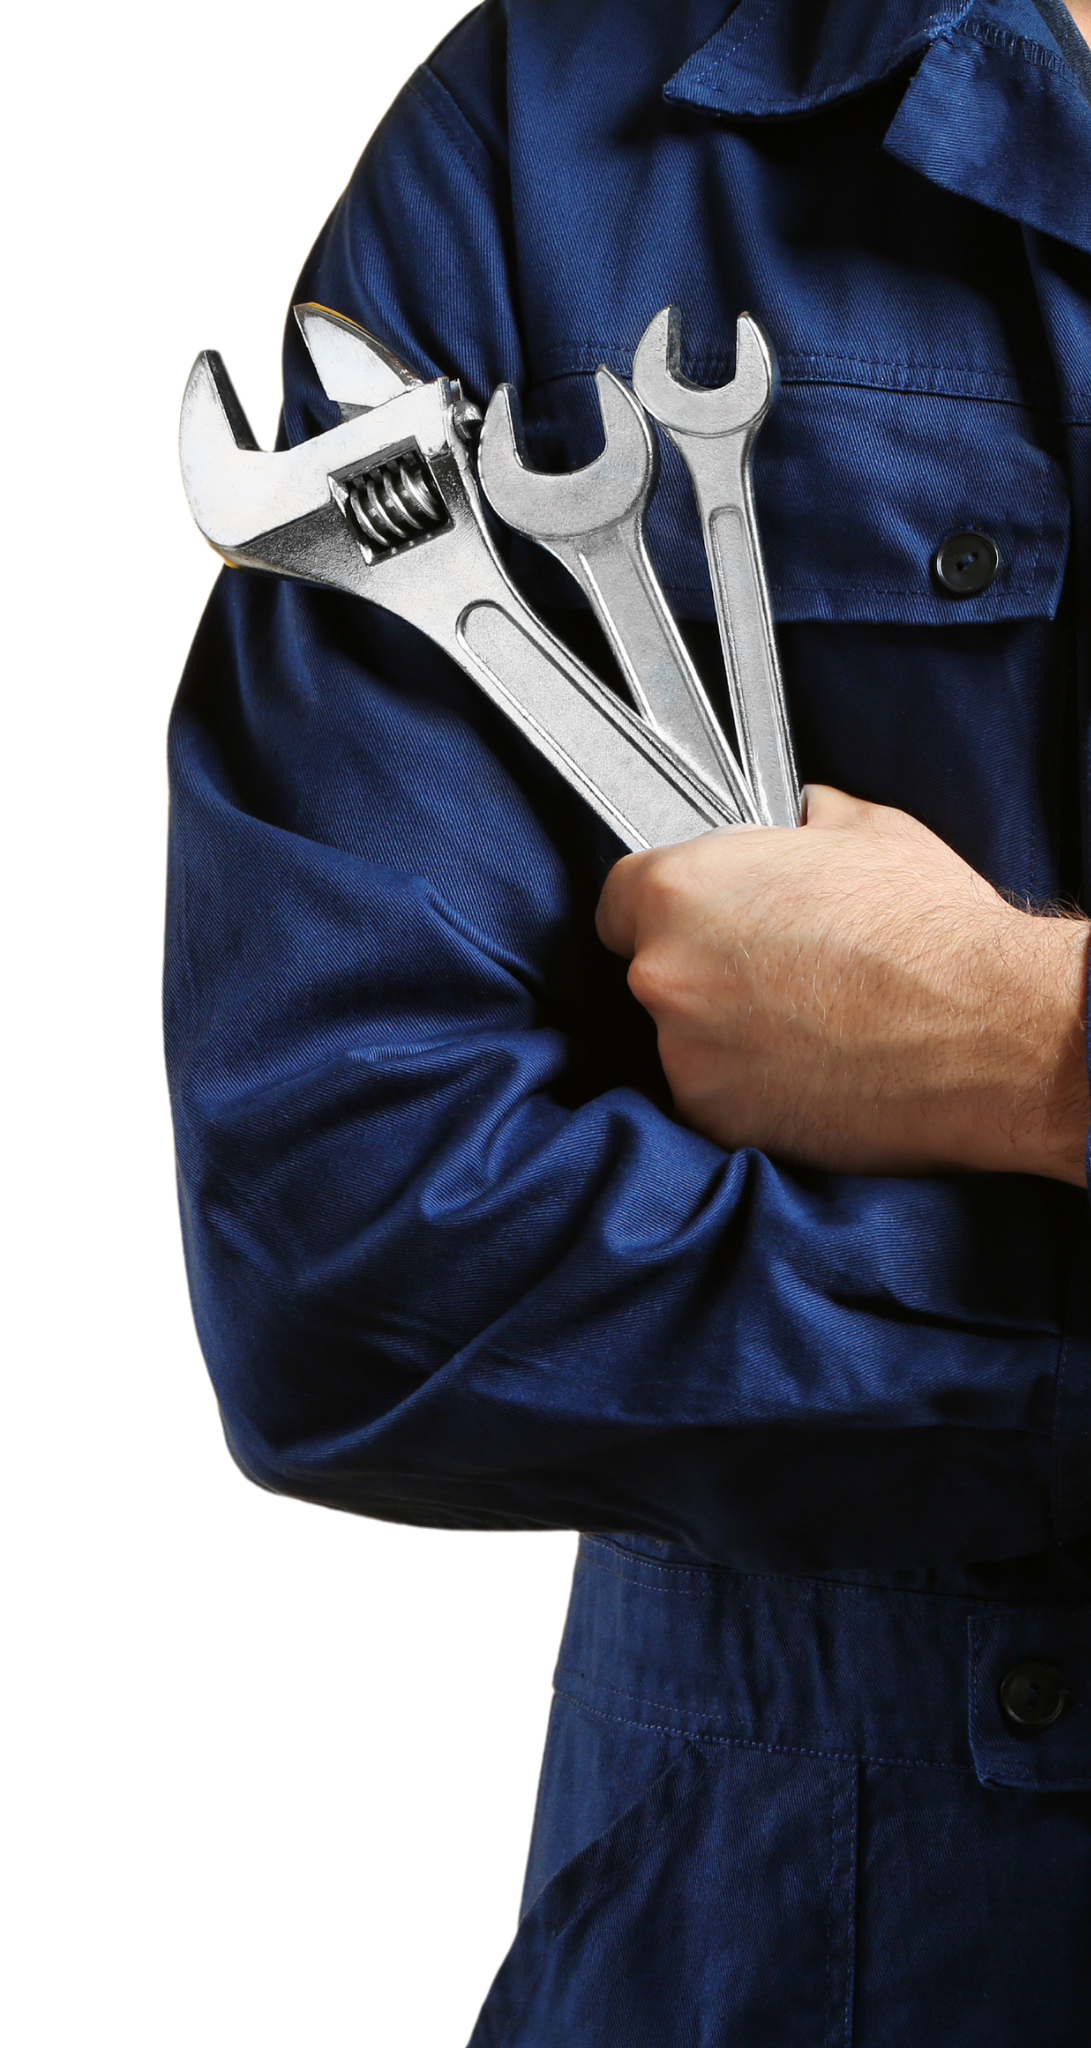 Man holding tools